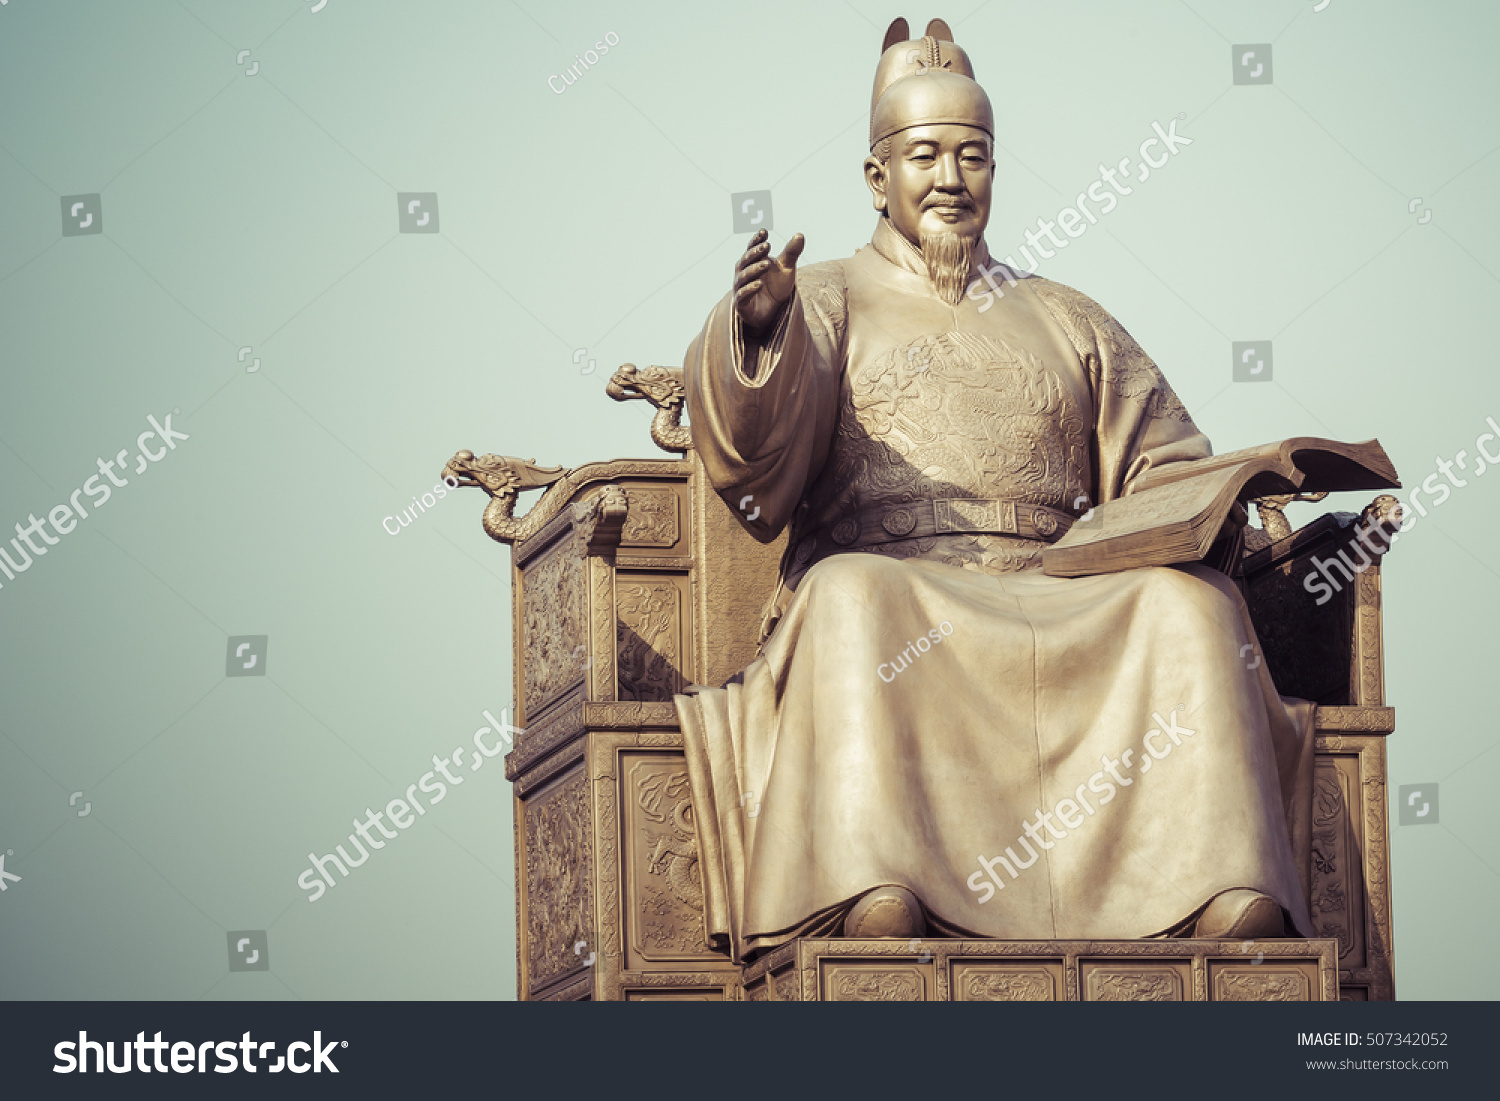 Public Statue of King Sejong, The Great King of South Korea, in Gwanghwamun Square in Seoul, South Korea. #507342052